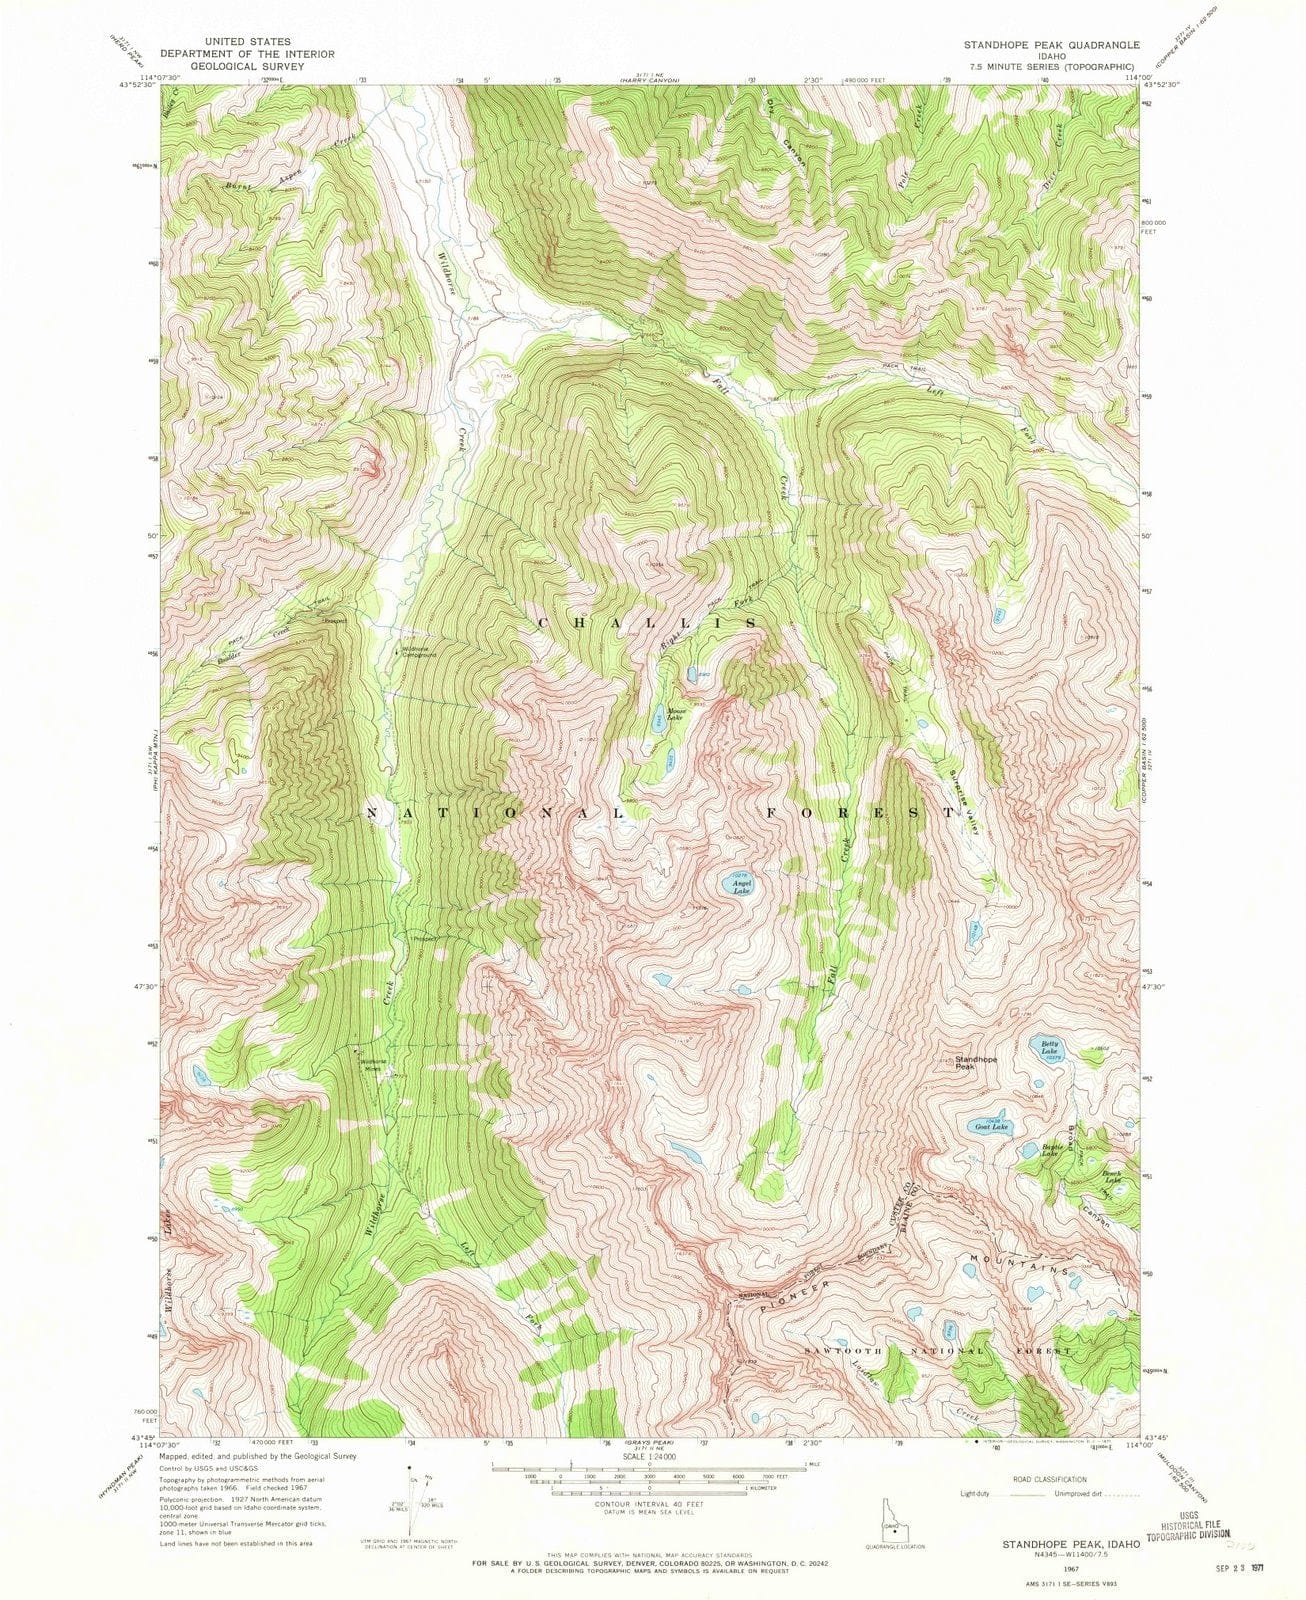 1967 Standhope Peak, ID - Idaho - USGS Topographic Map